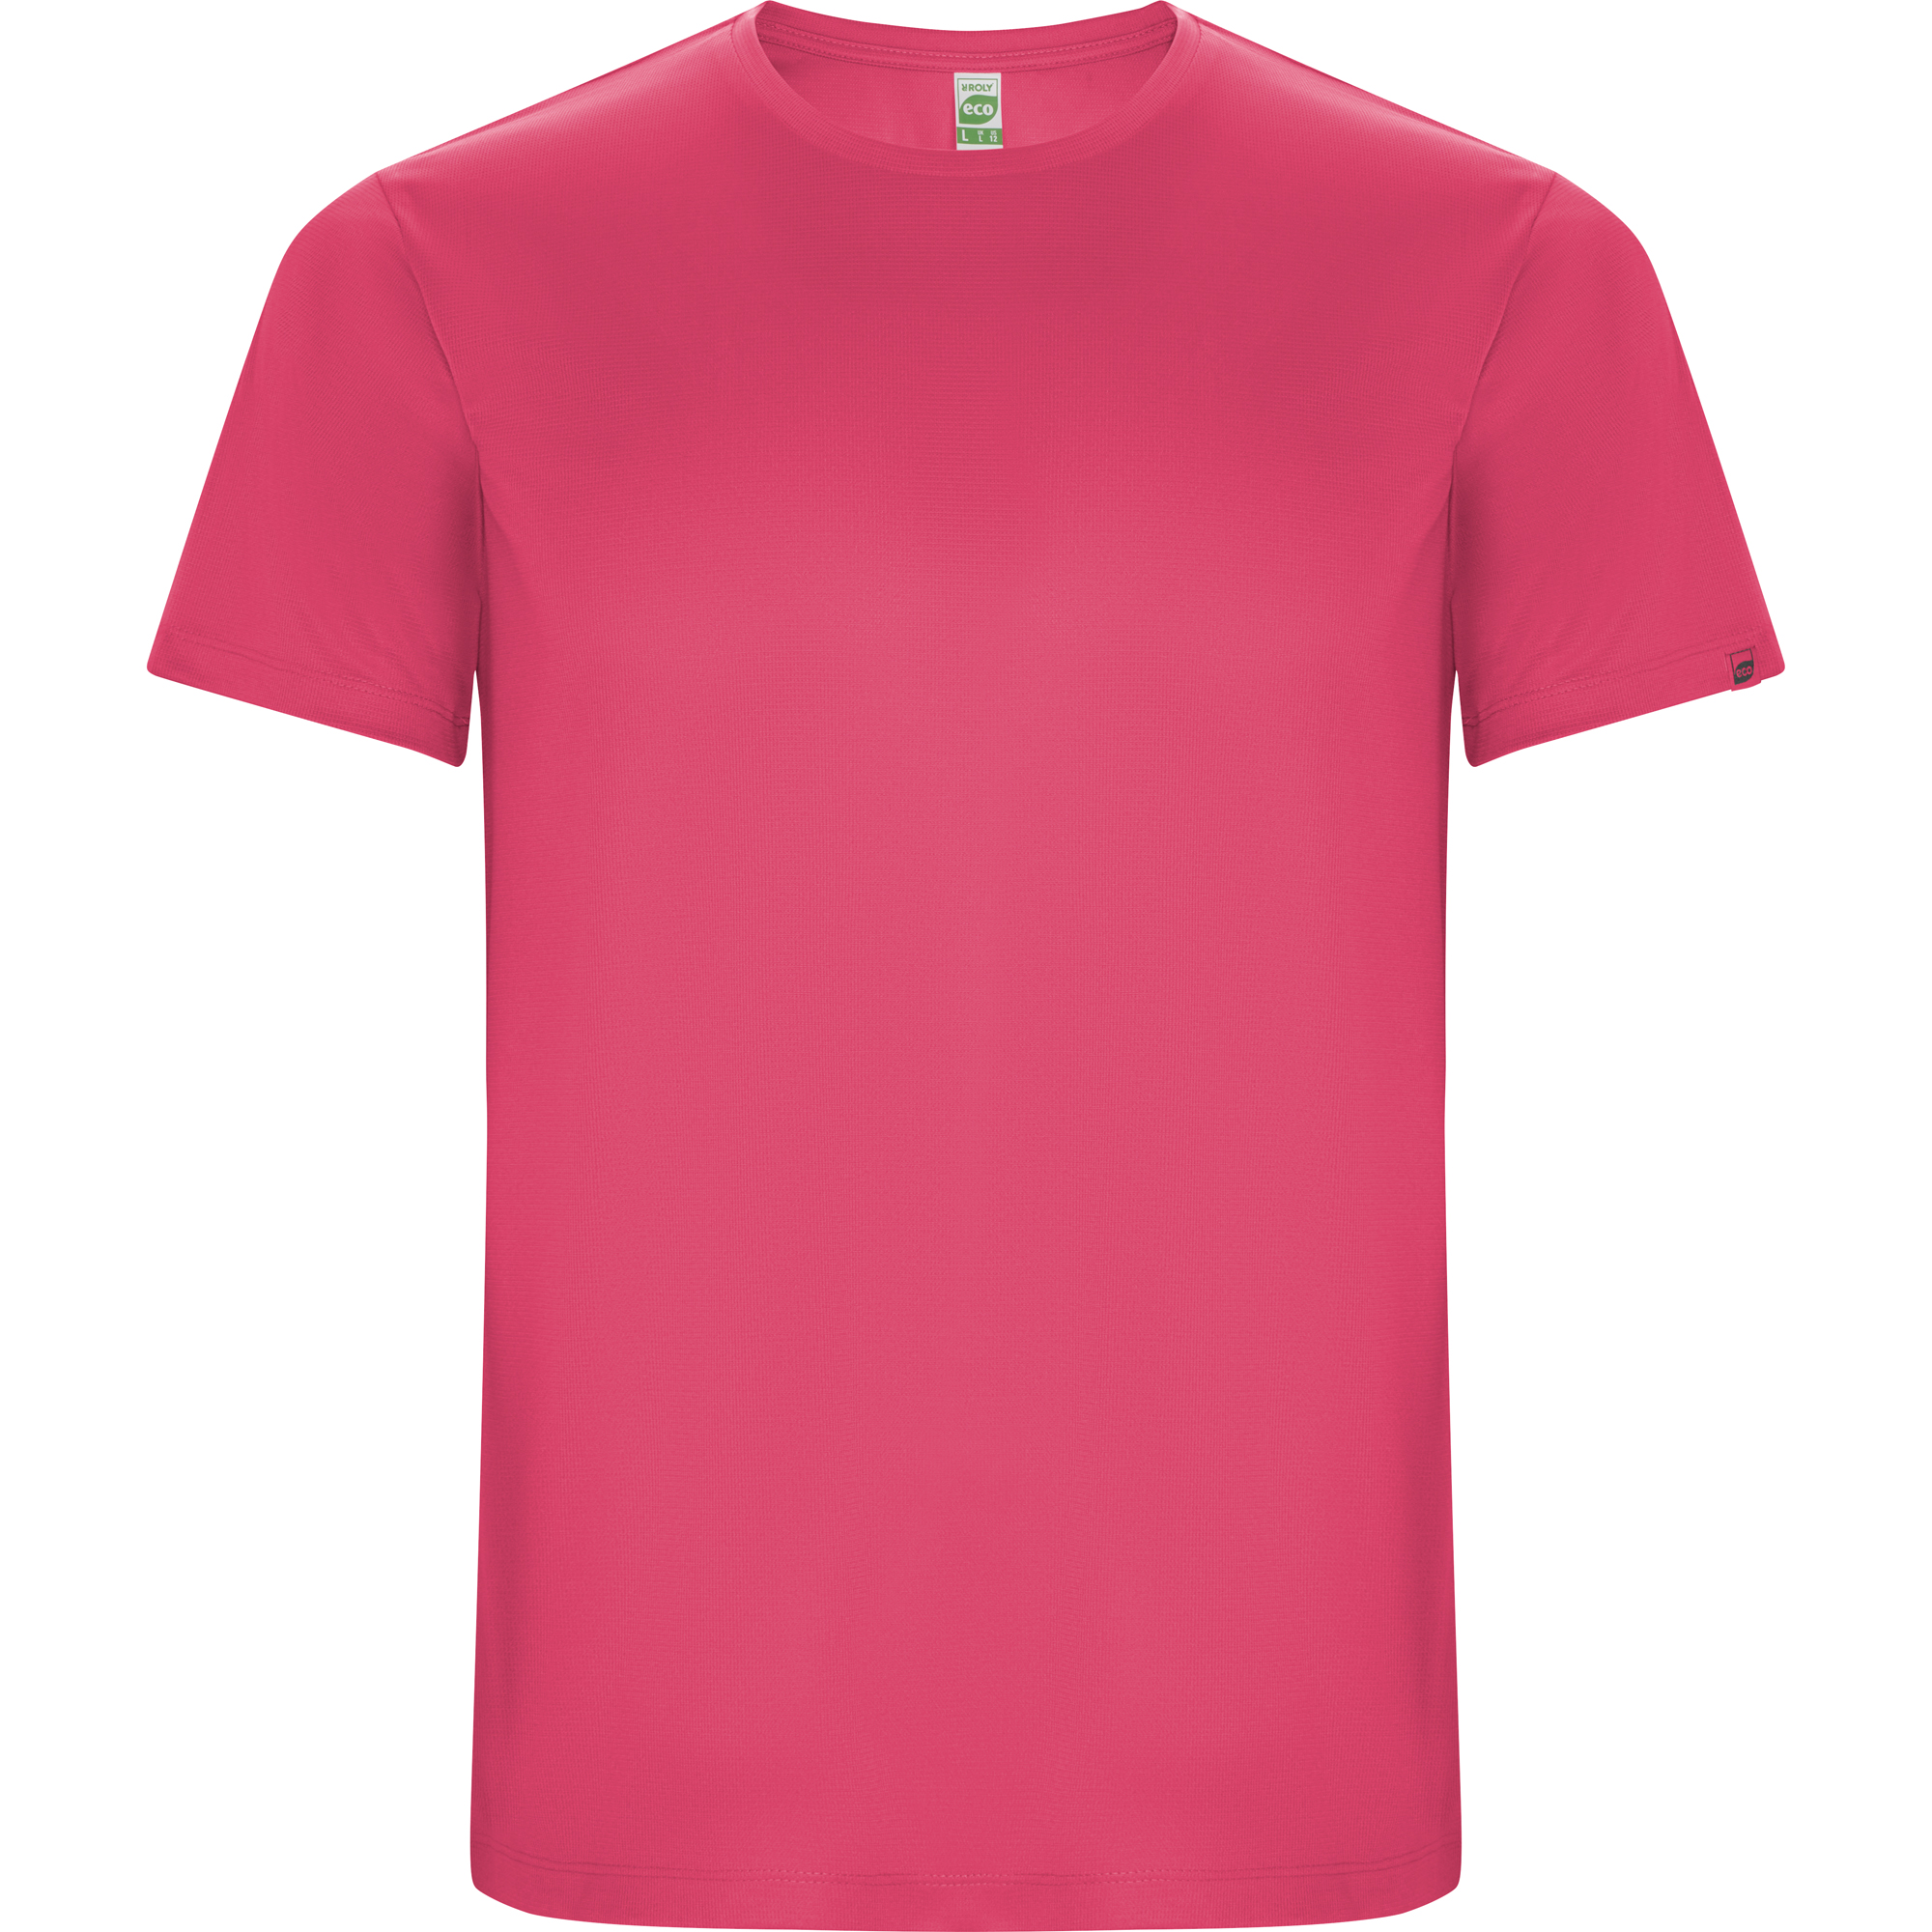 r0427-roly-imola-t-shirt-tecnica-rosa-fluo.jpg